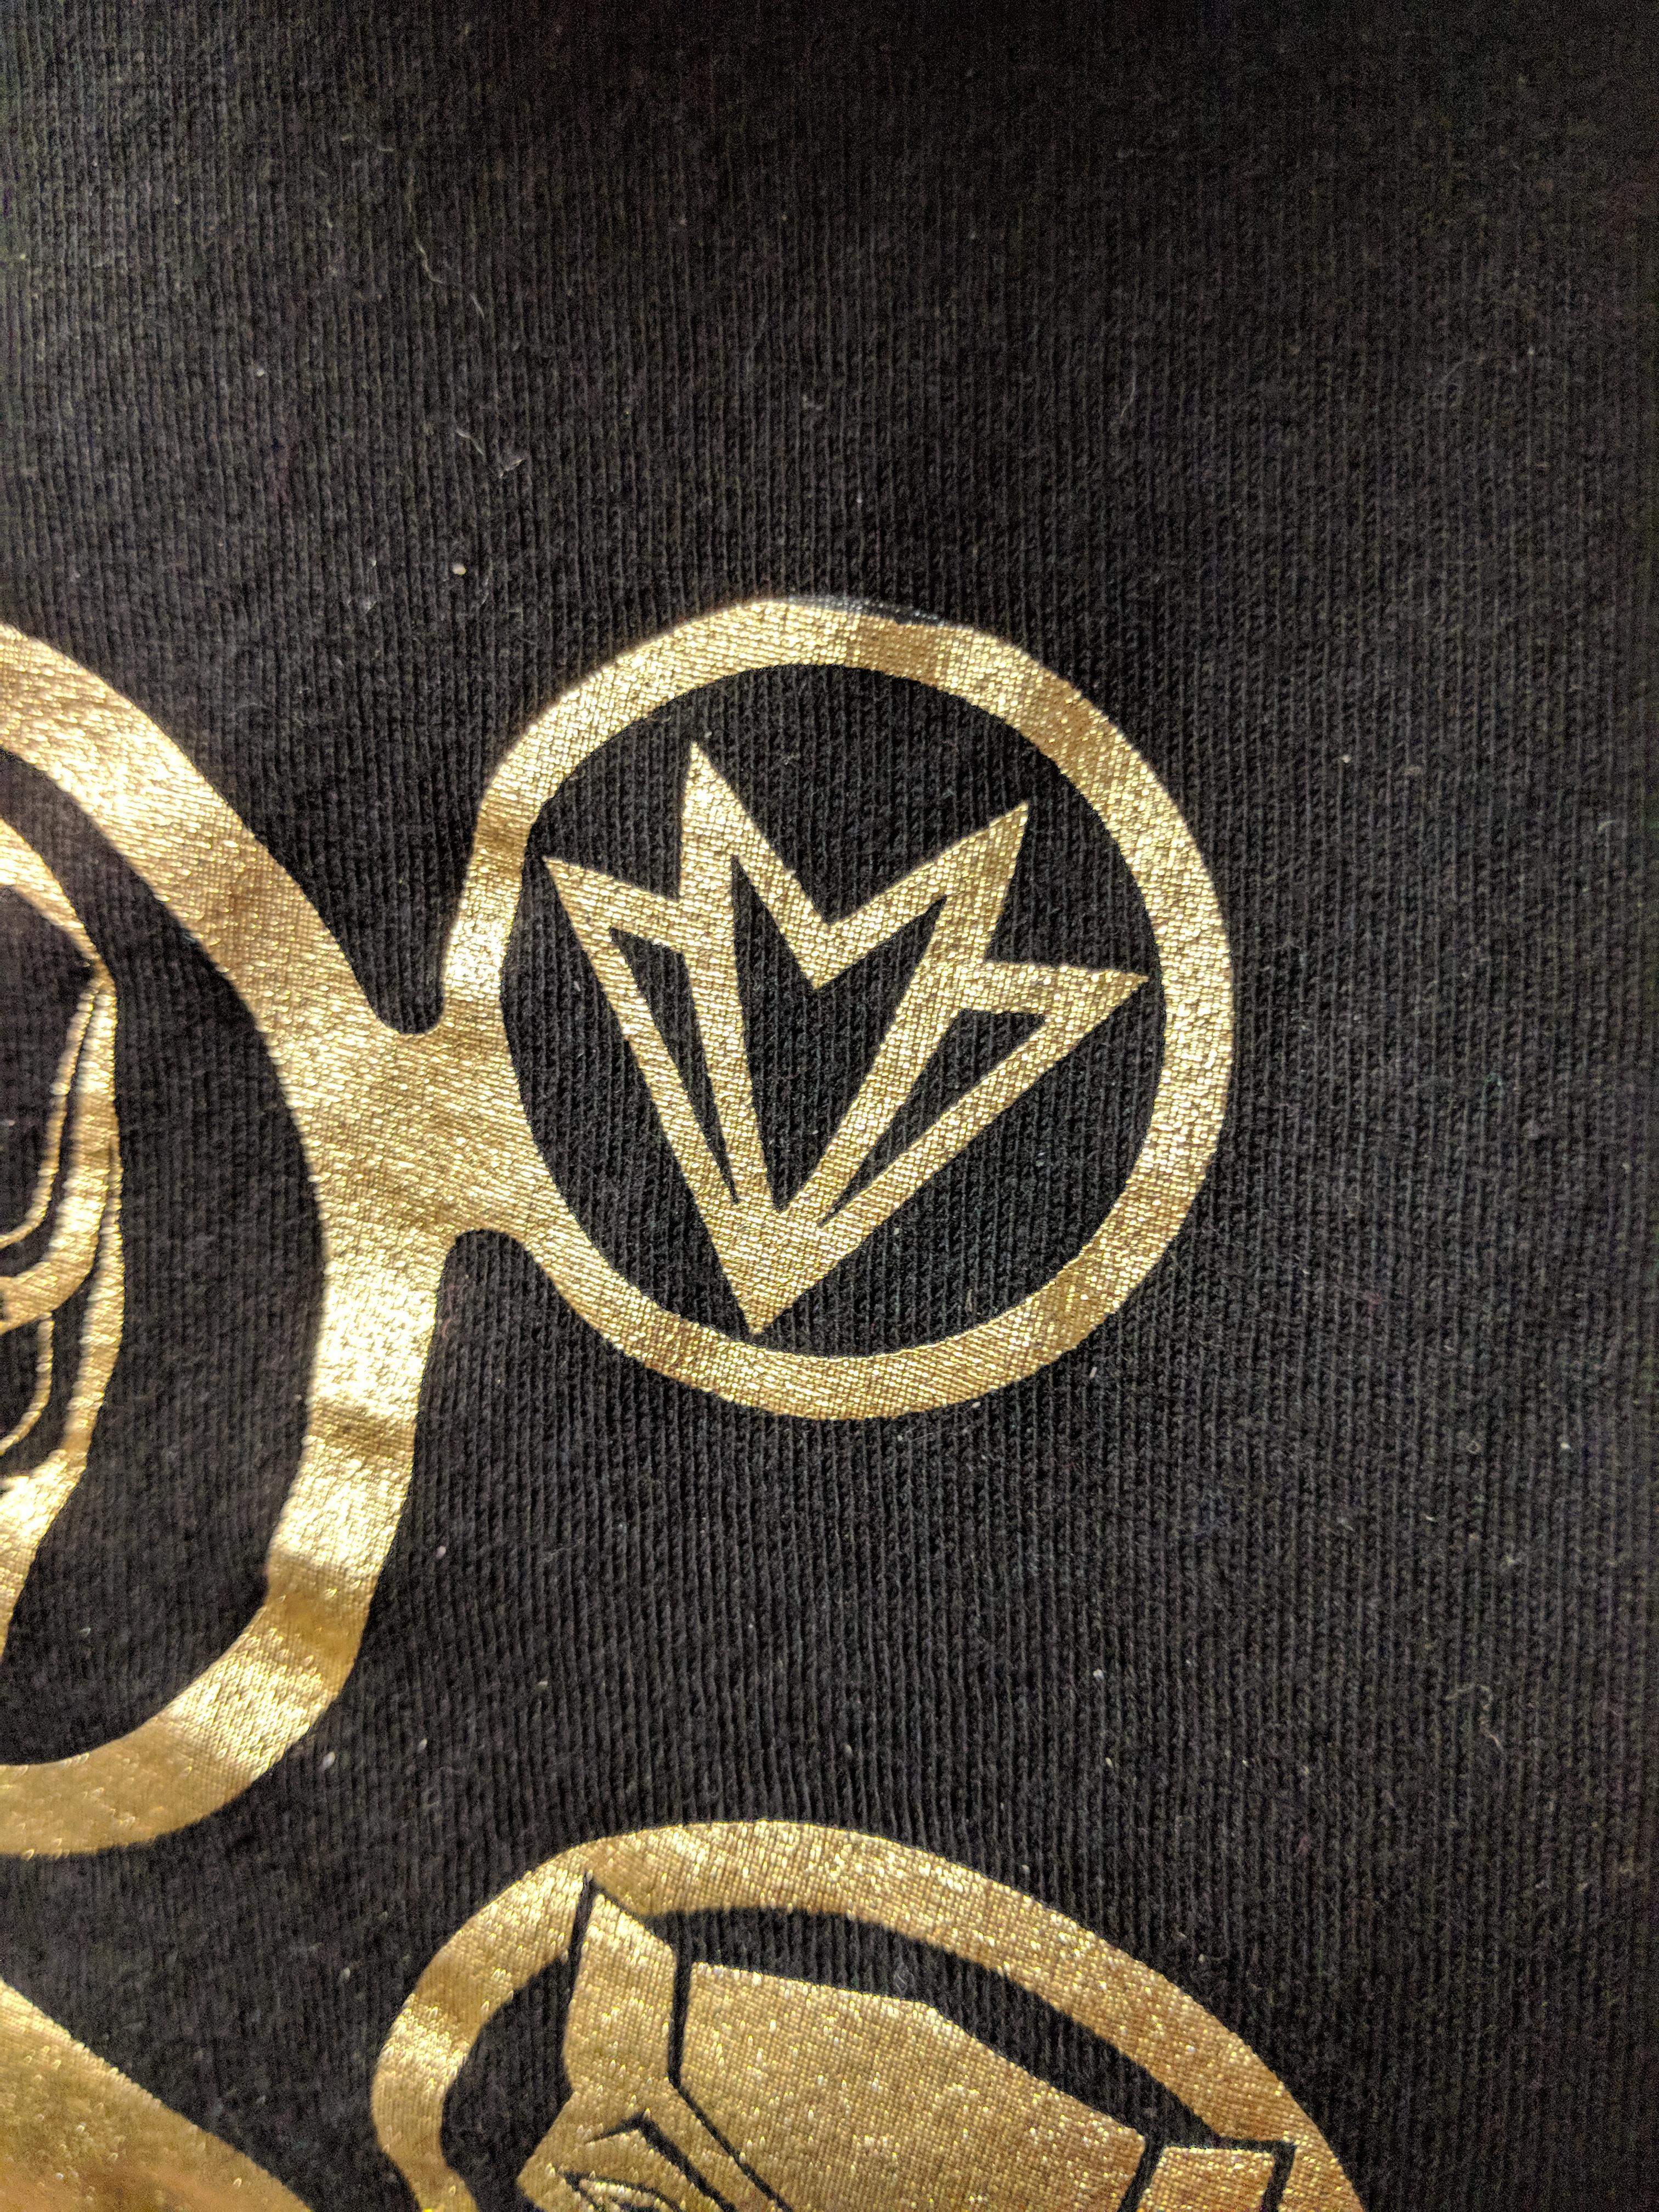 Falcon Marvel Logo - Which Marvel superhero does this symbol belong to? : marvelstudios